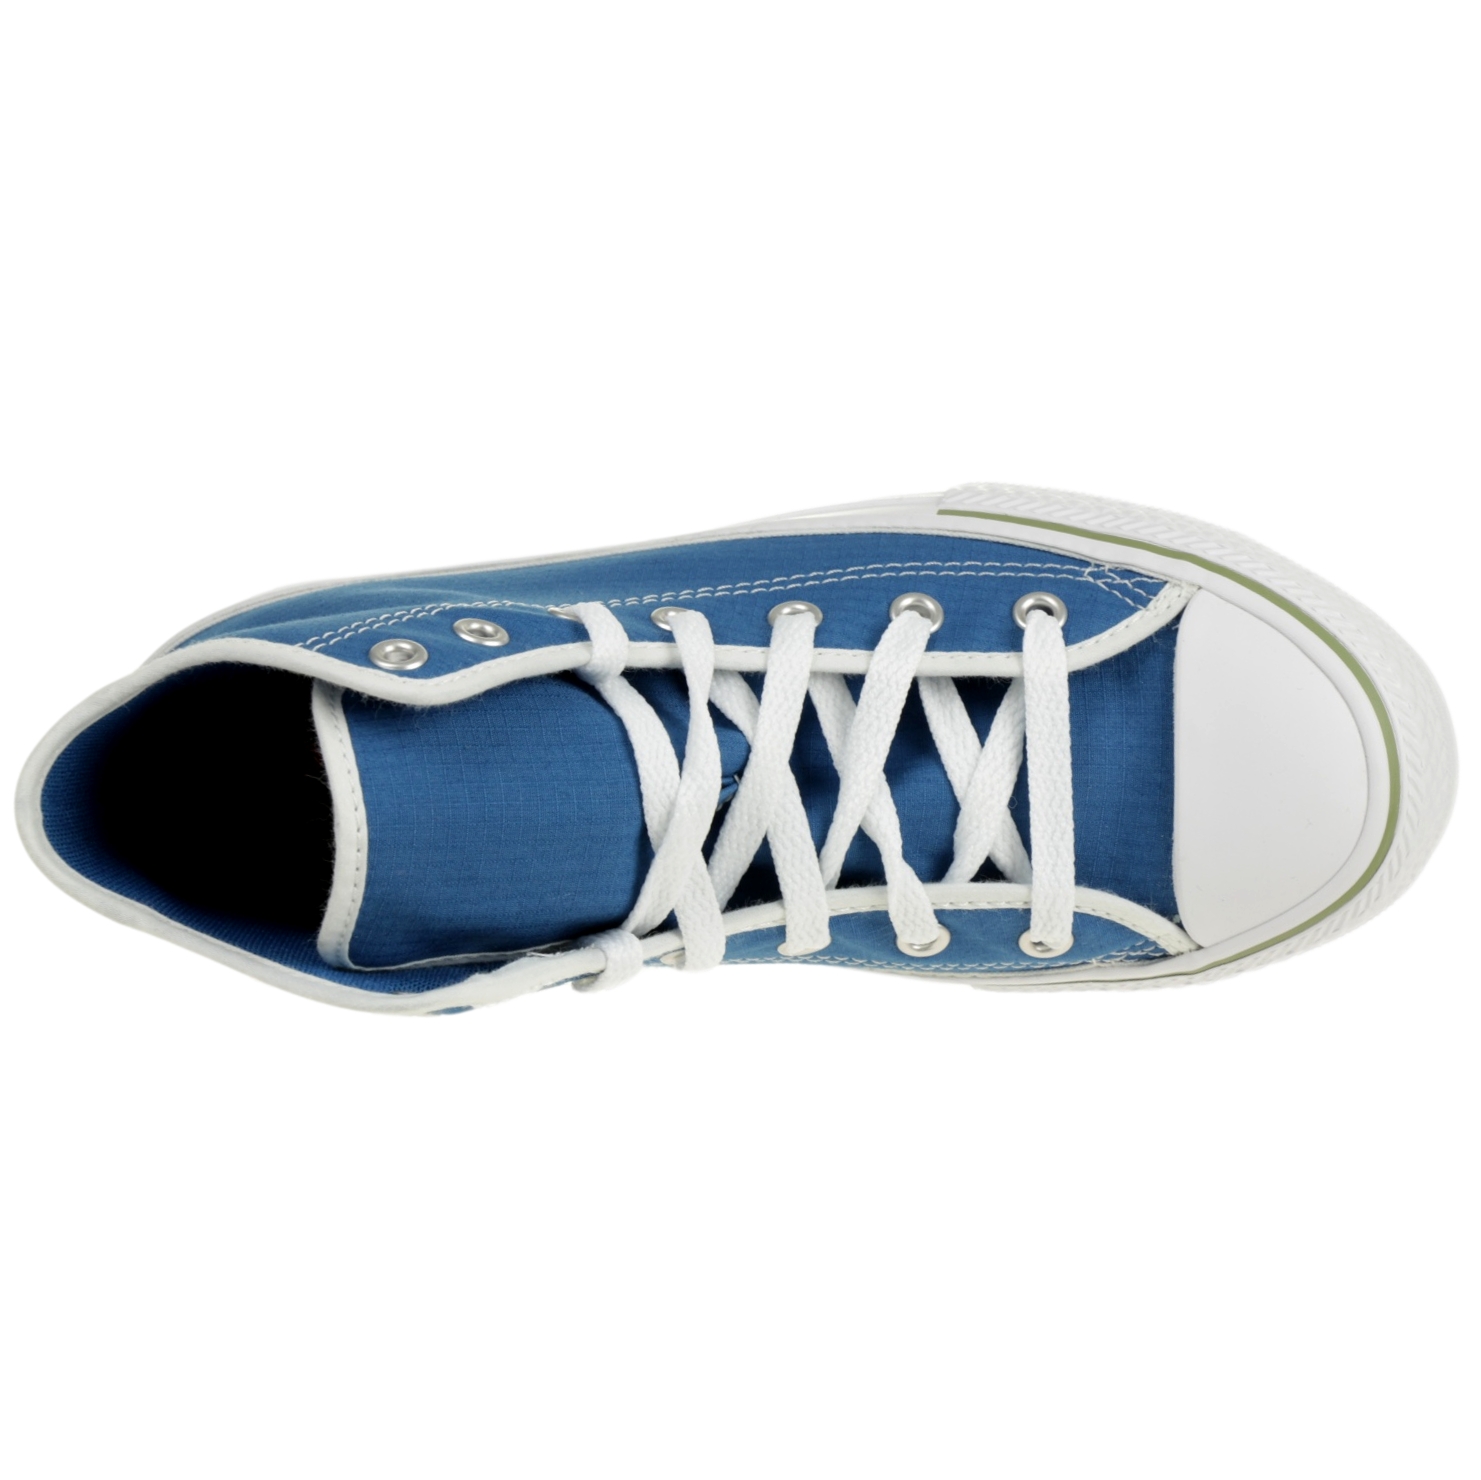 Converse CTAS Hi Egyptian Blue Hi-Top Kinder Sneaker 667553C Blau 